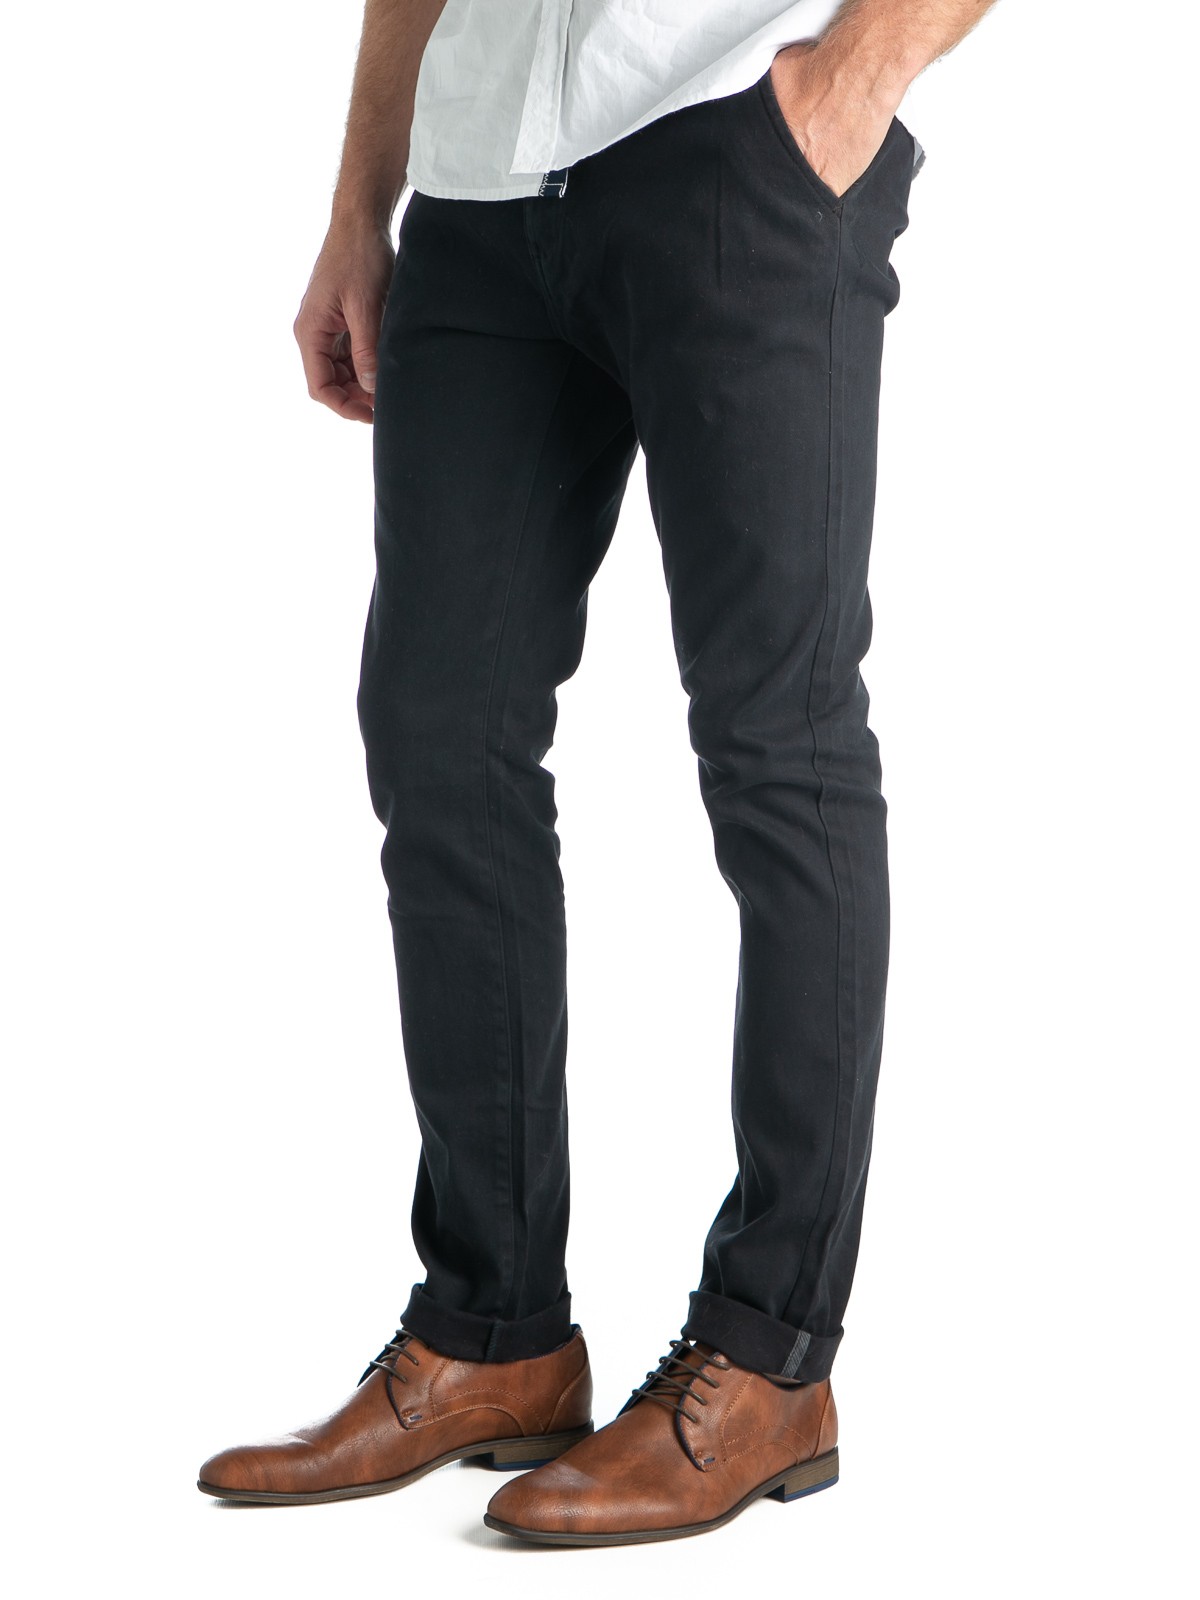 Pantalon chino slim coloris noir homme - DistriCenter